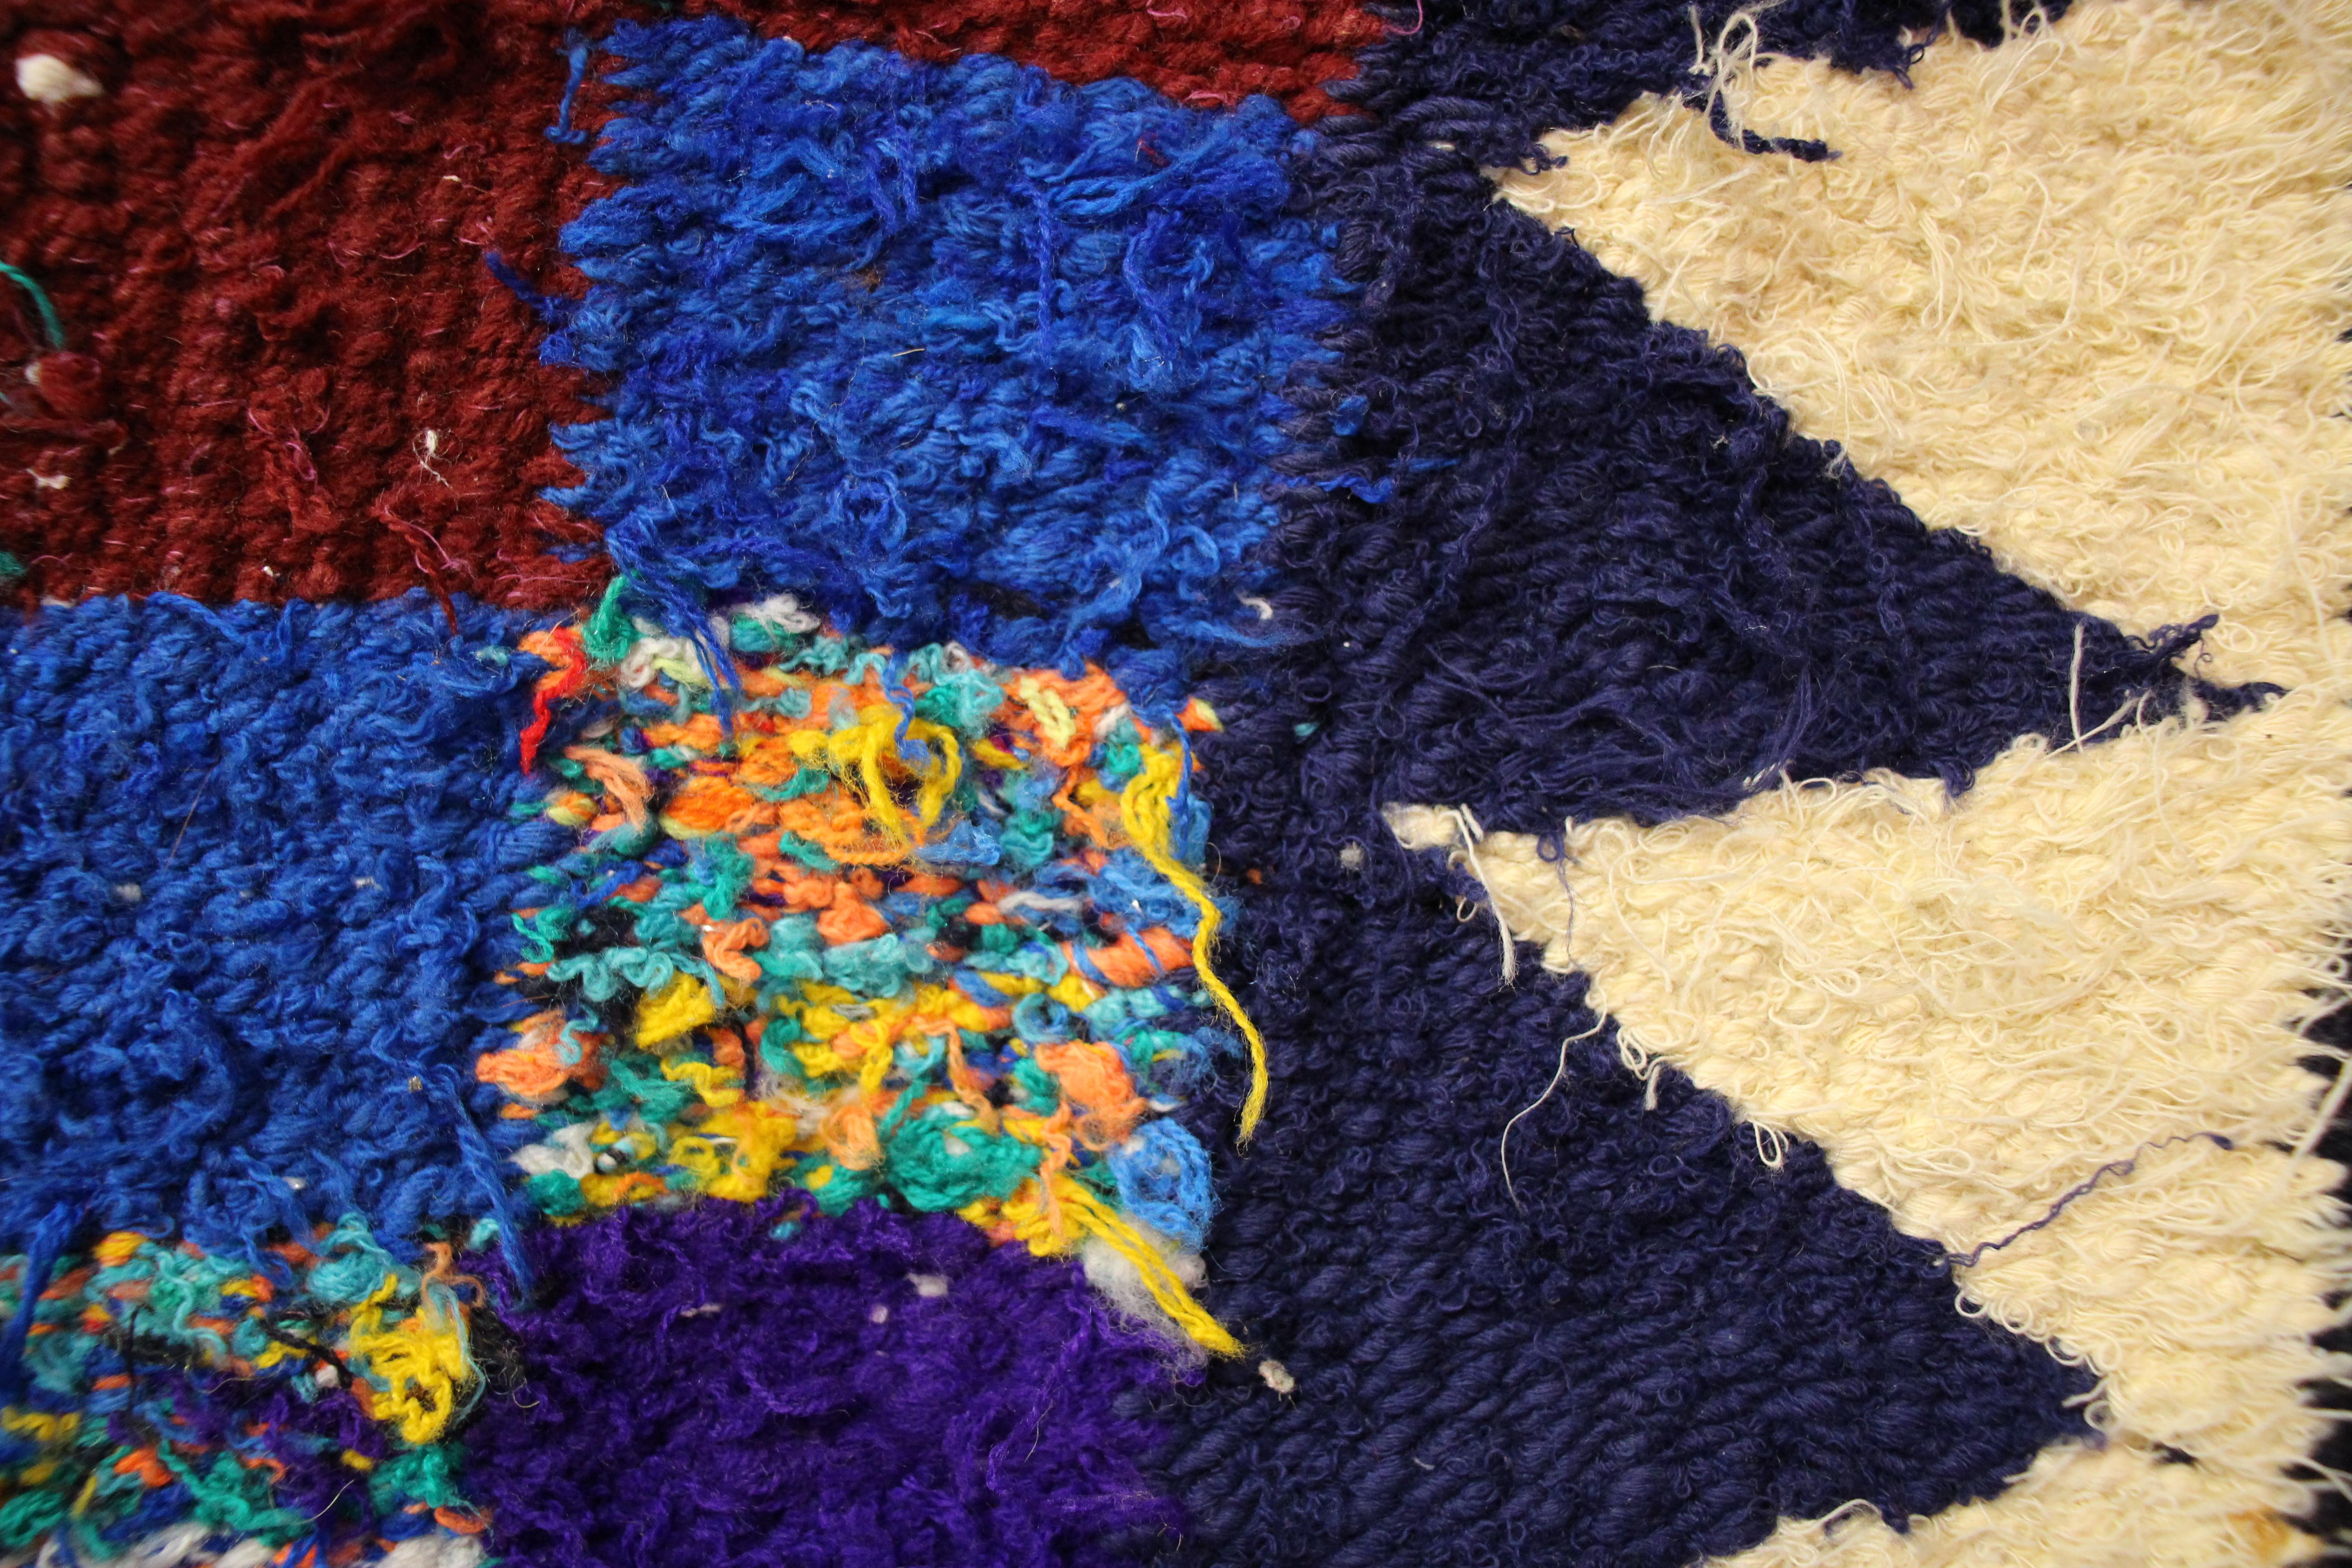 Late 20th Century Big Colorful Vintage Carpet, Boho Style Rug, Similar to Kilim